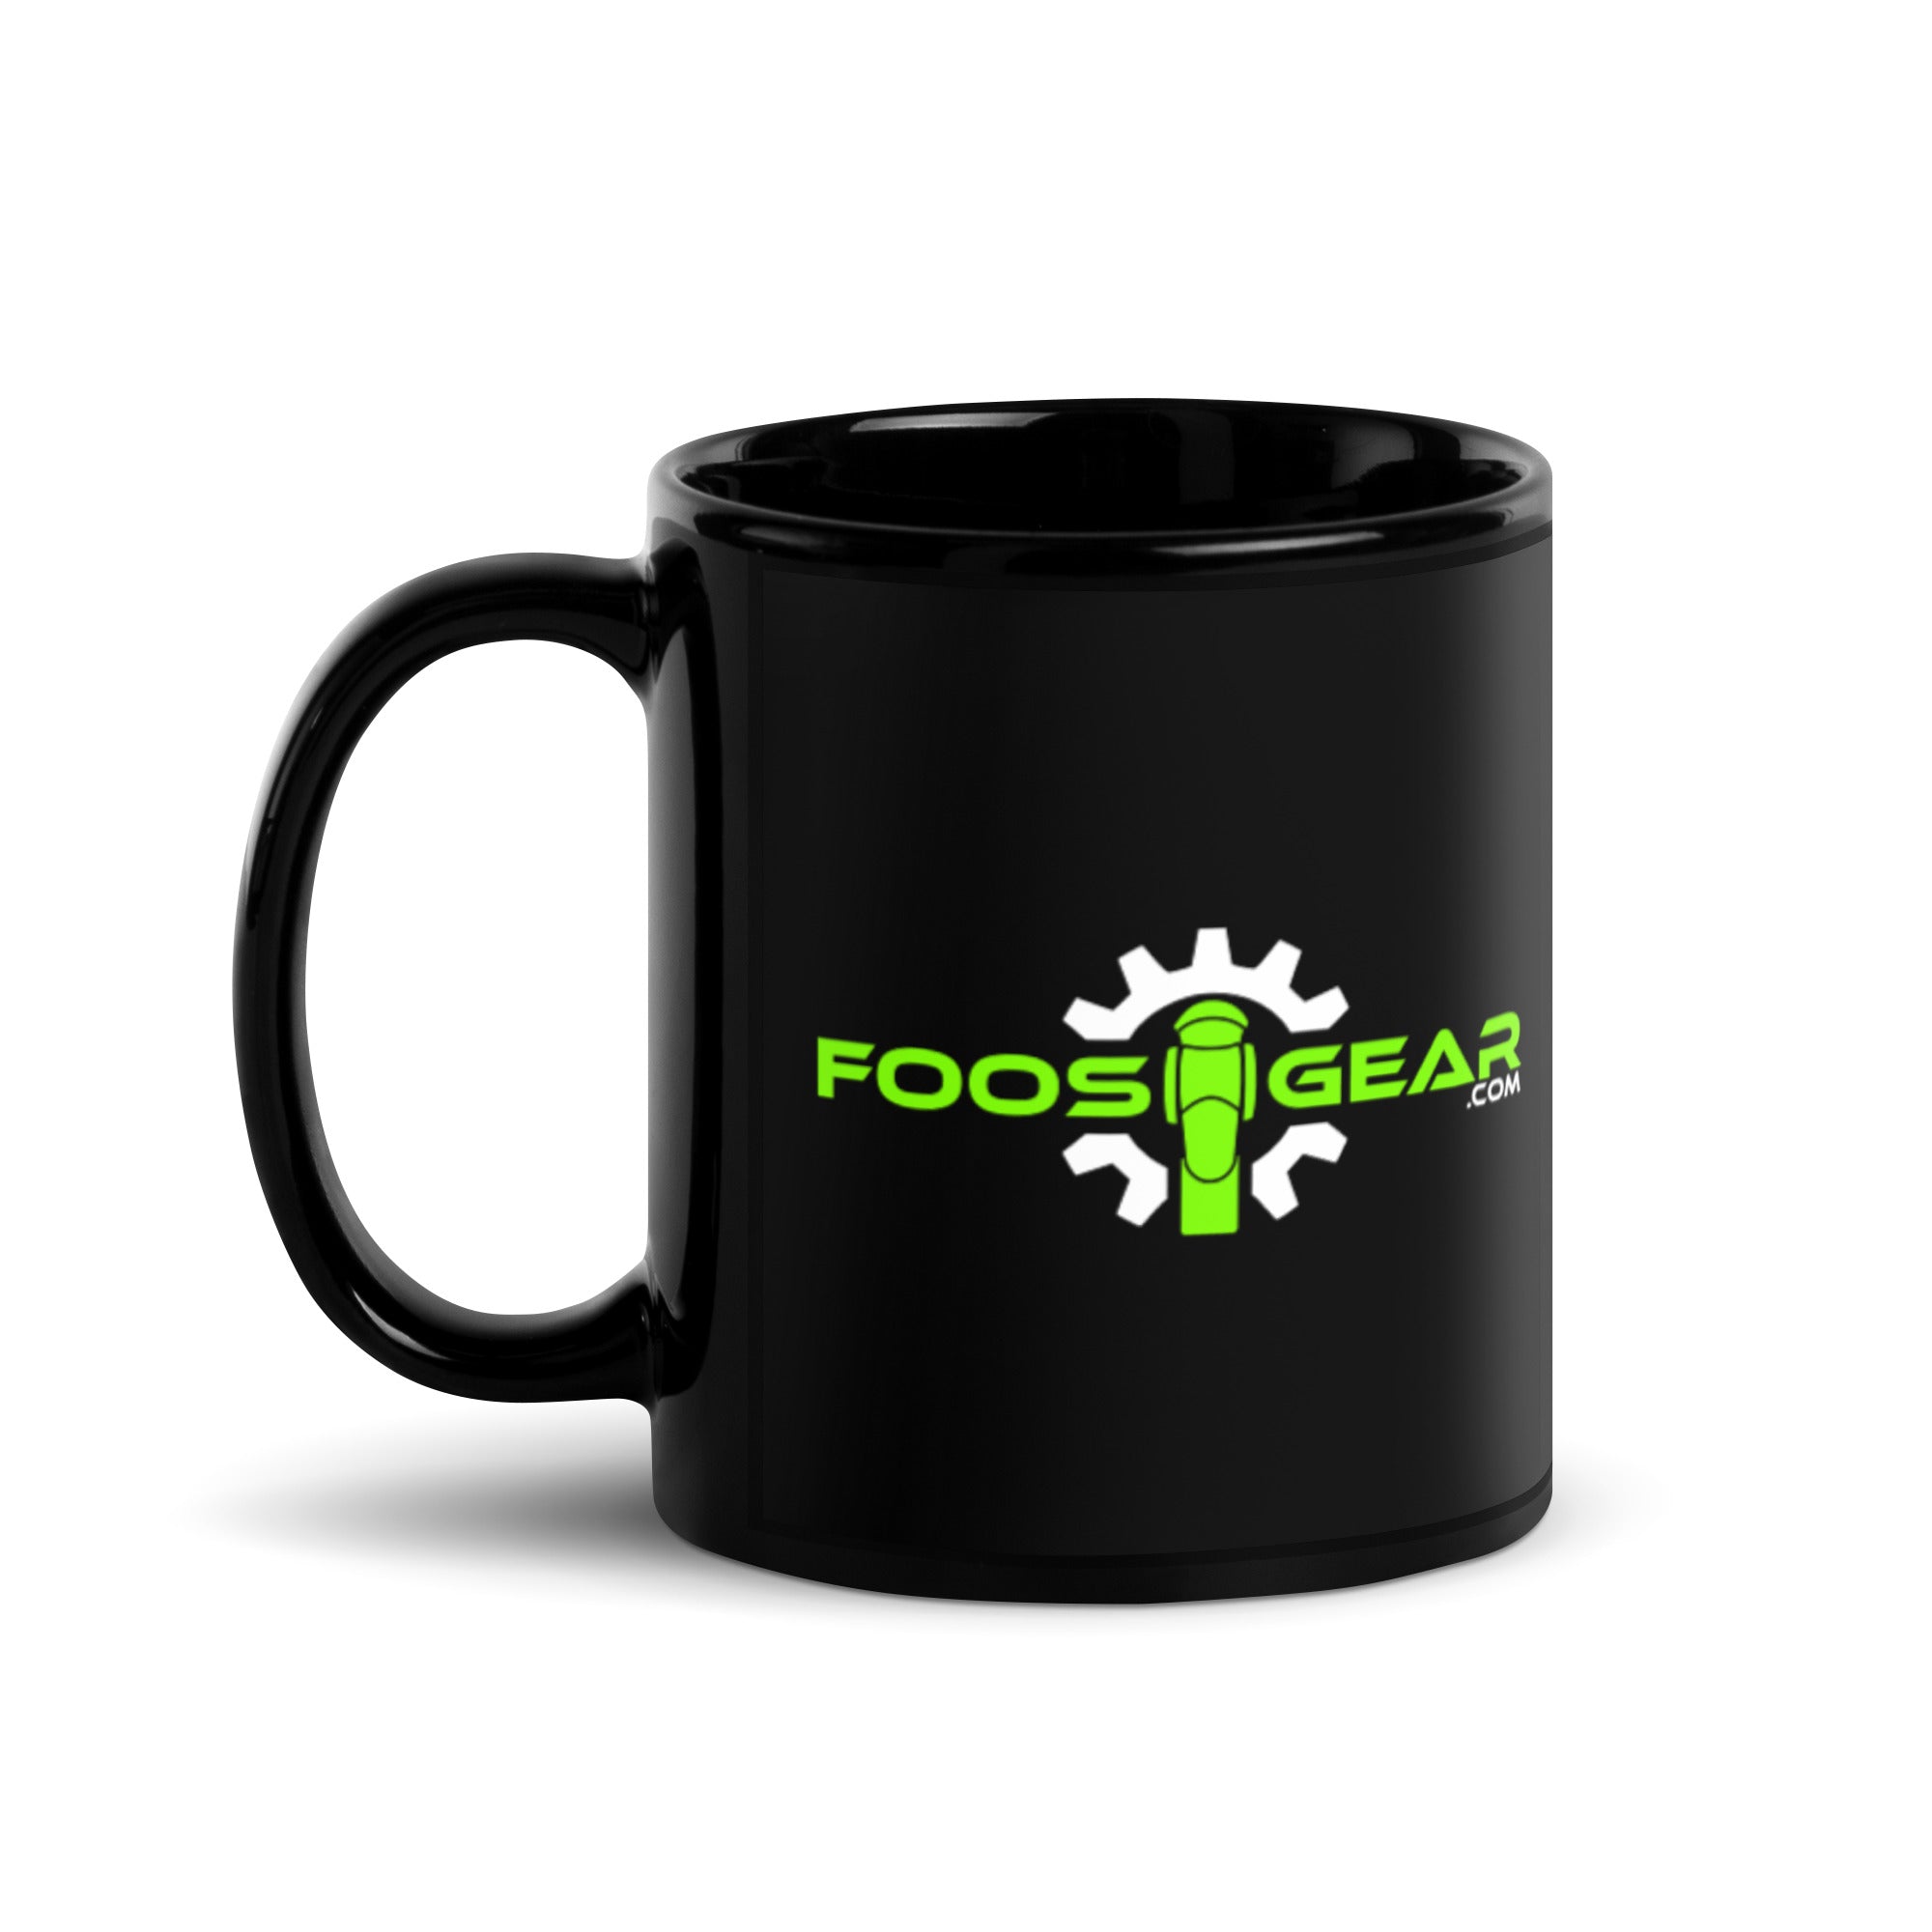 Foosgear Mug